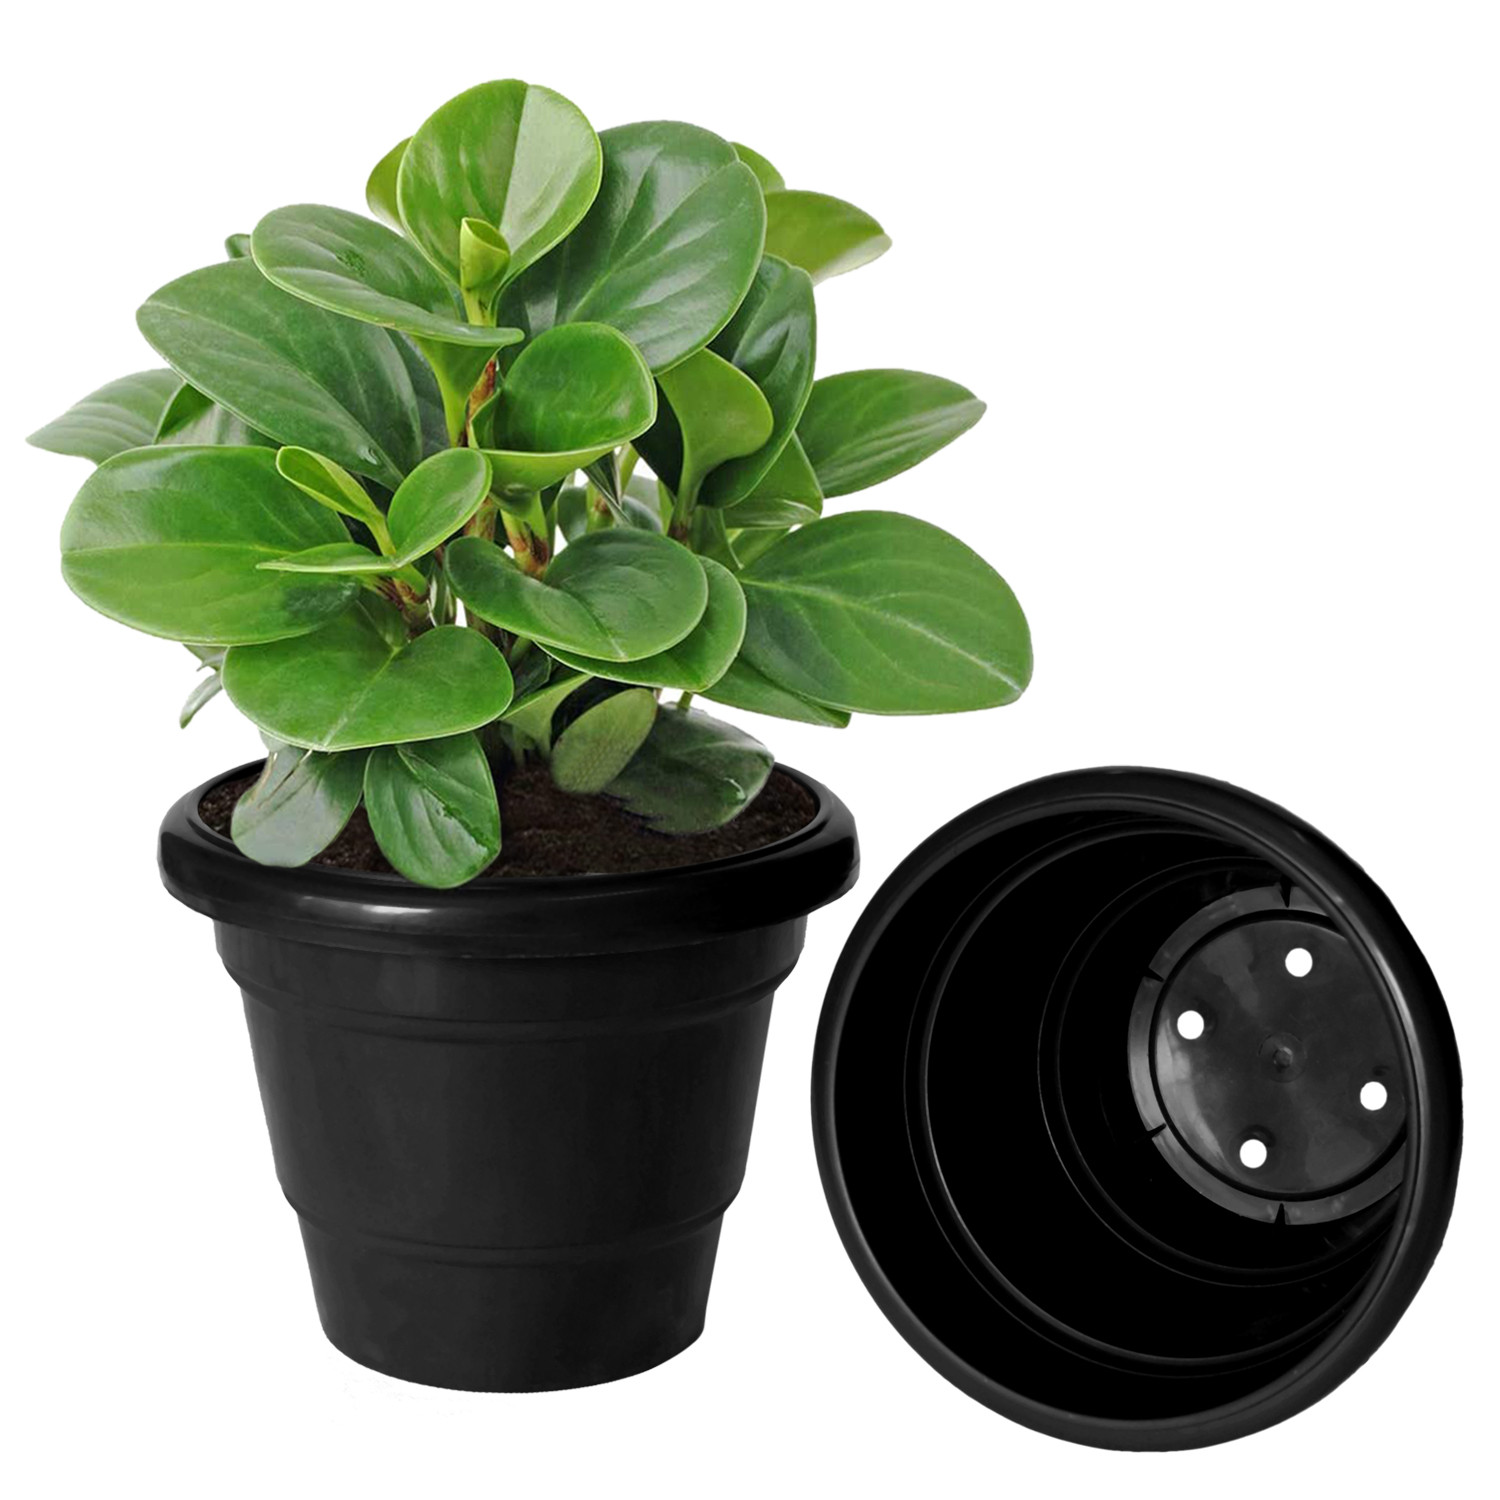 Kuber Industries Solid 2 Layered Plastic Flower Pot|Gamla For Home Decor,Nursery,Balcony,Garden,6